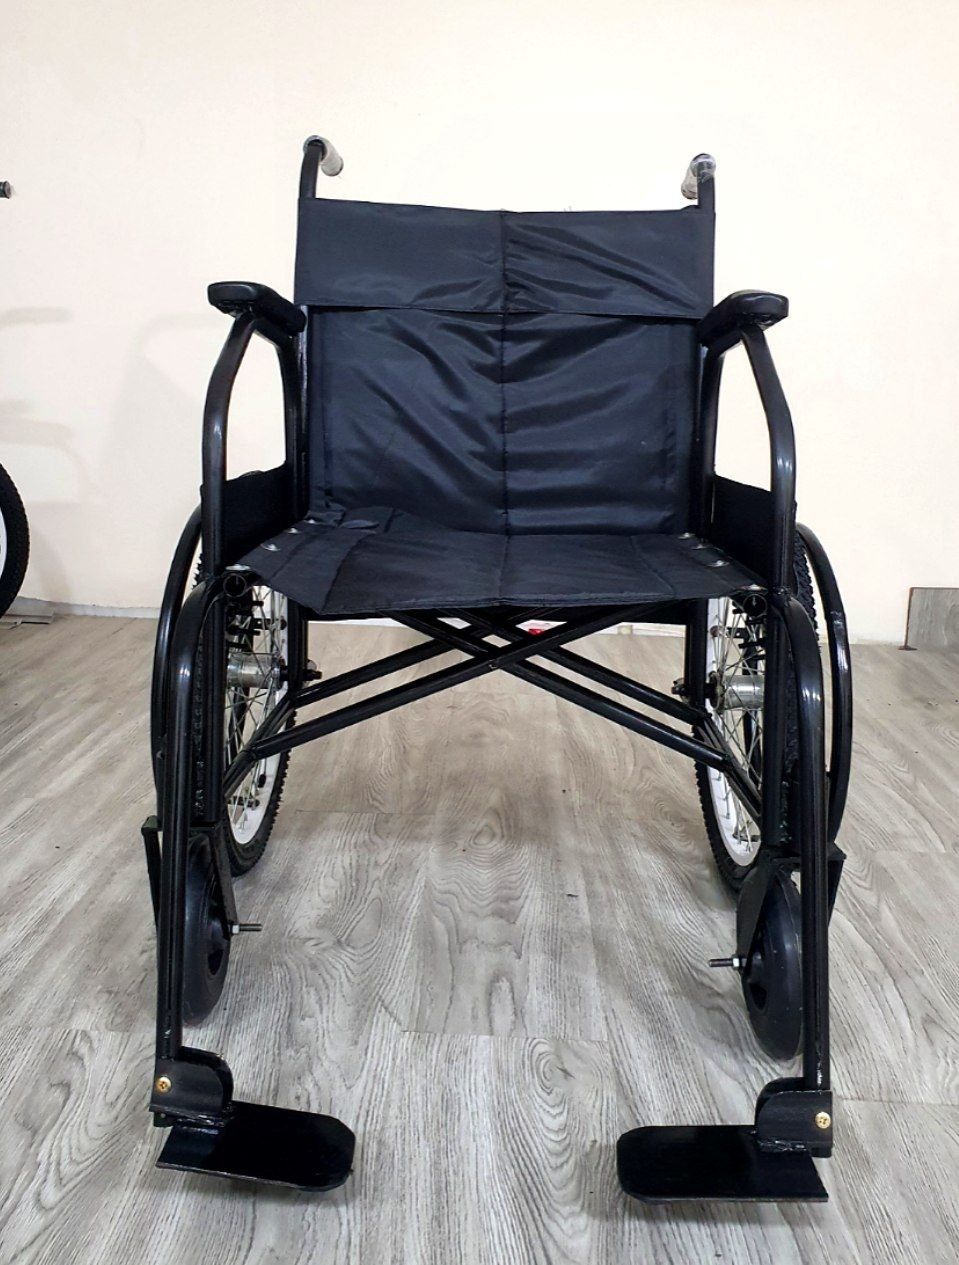 Dostavka bepul Инвалидная коляска Ногиронлар араваси N 144